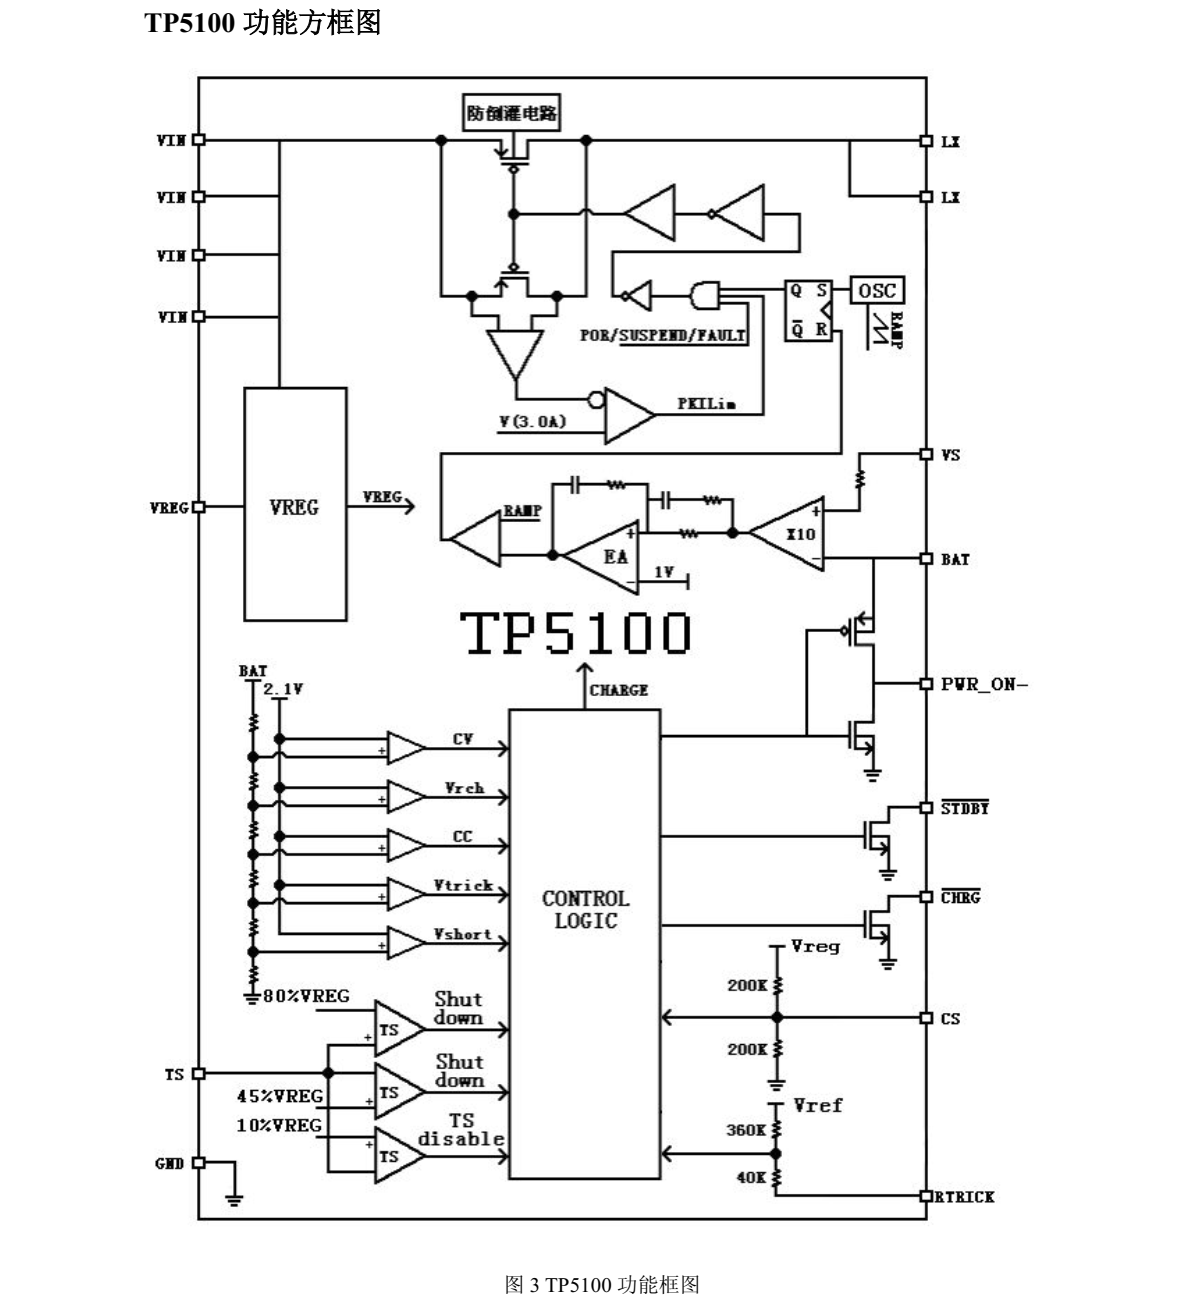 TP5100是一款开关降压型双节8.4V/单节4.2V锂电池充电管理芯片